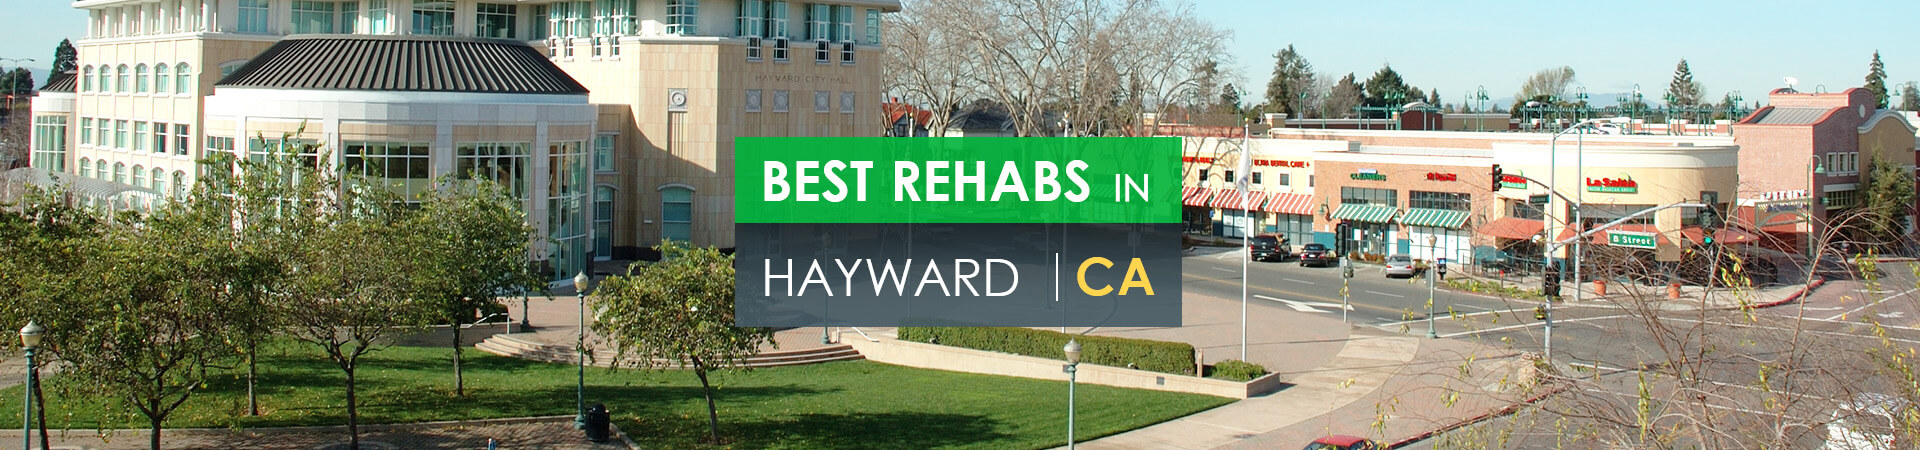 Best rehabs in Hayward, CA